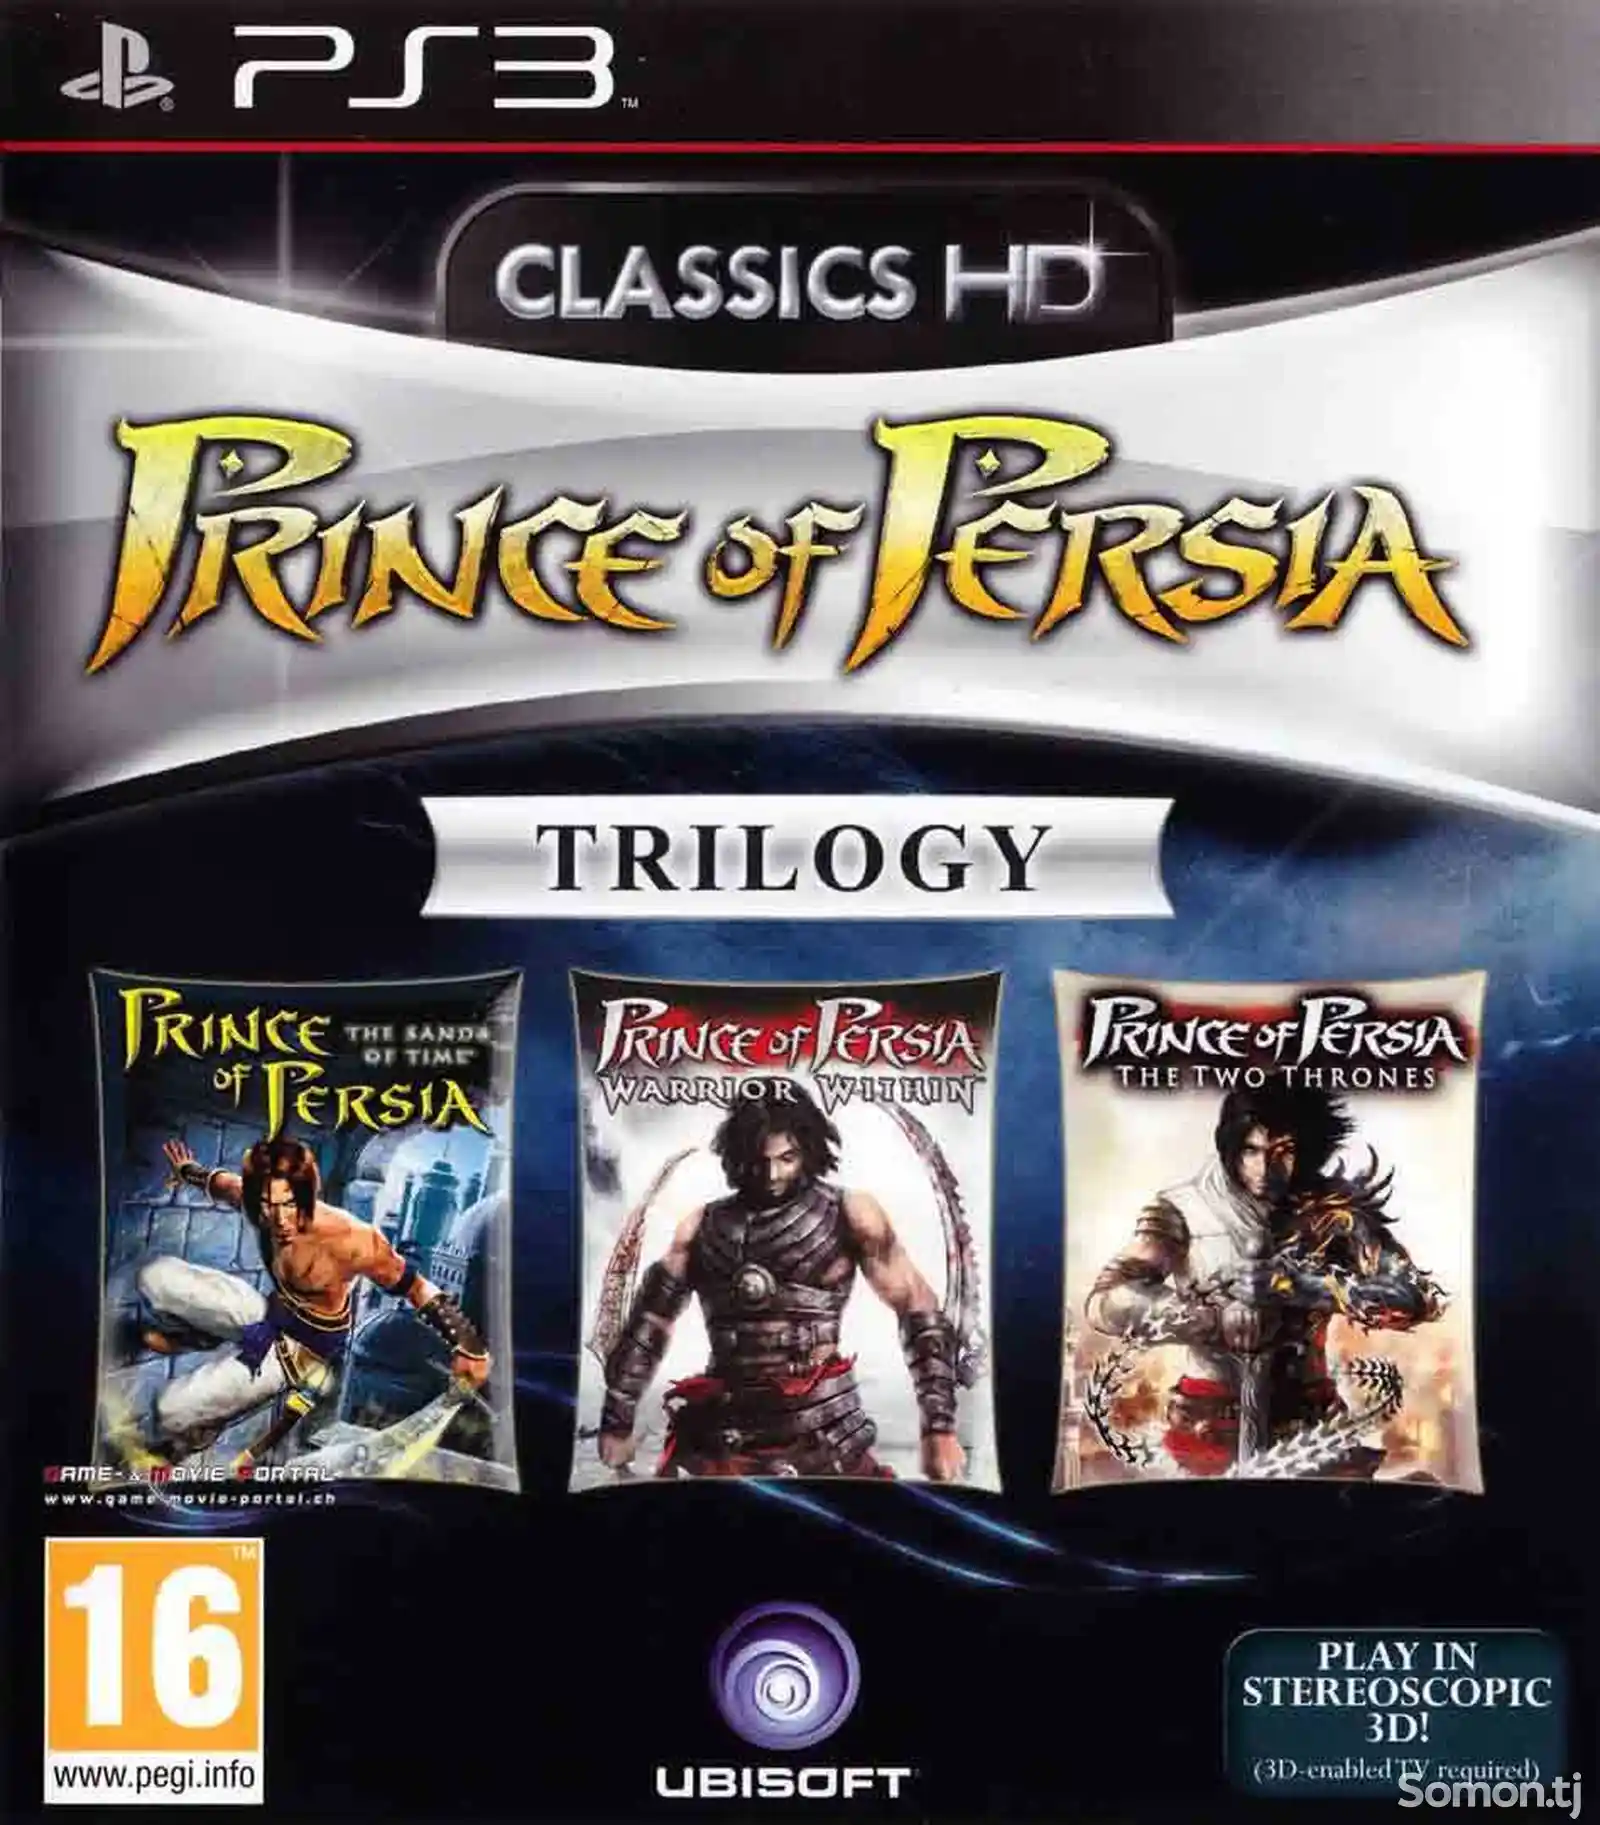 Игра Prince Of Persia на всех моделей Play Station-3